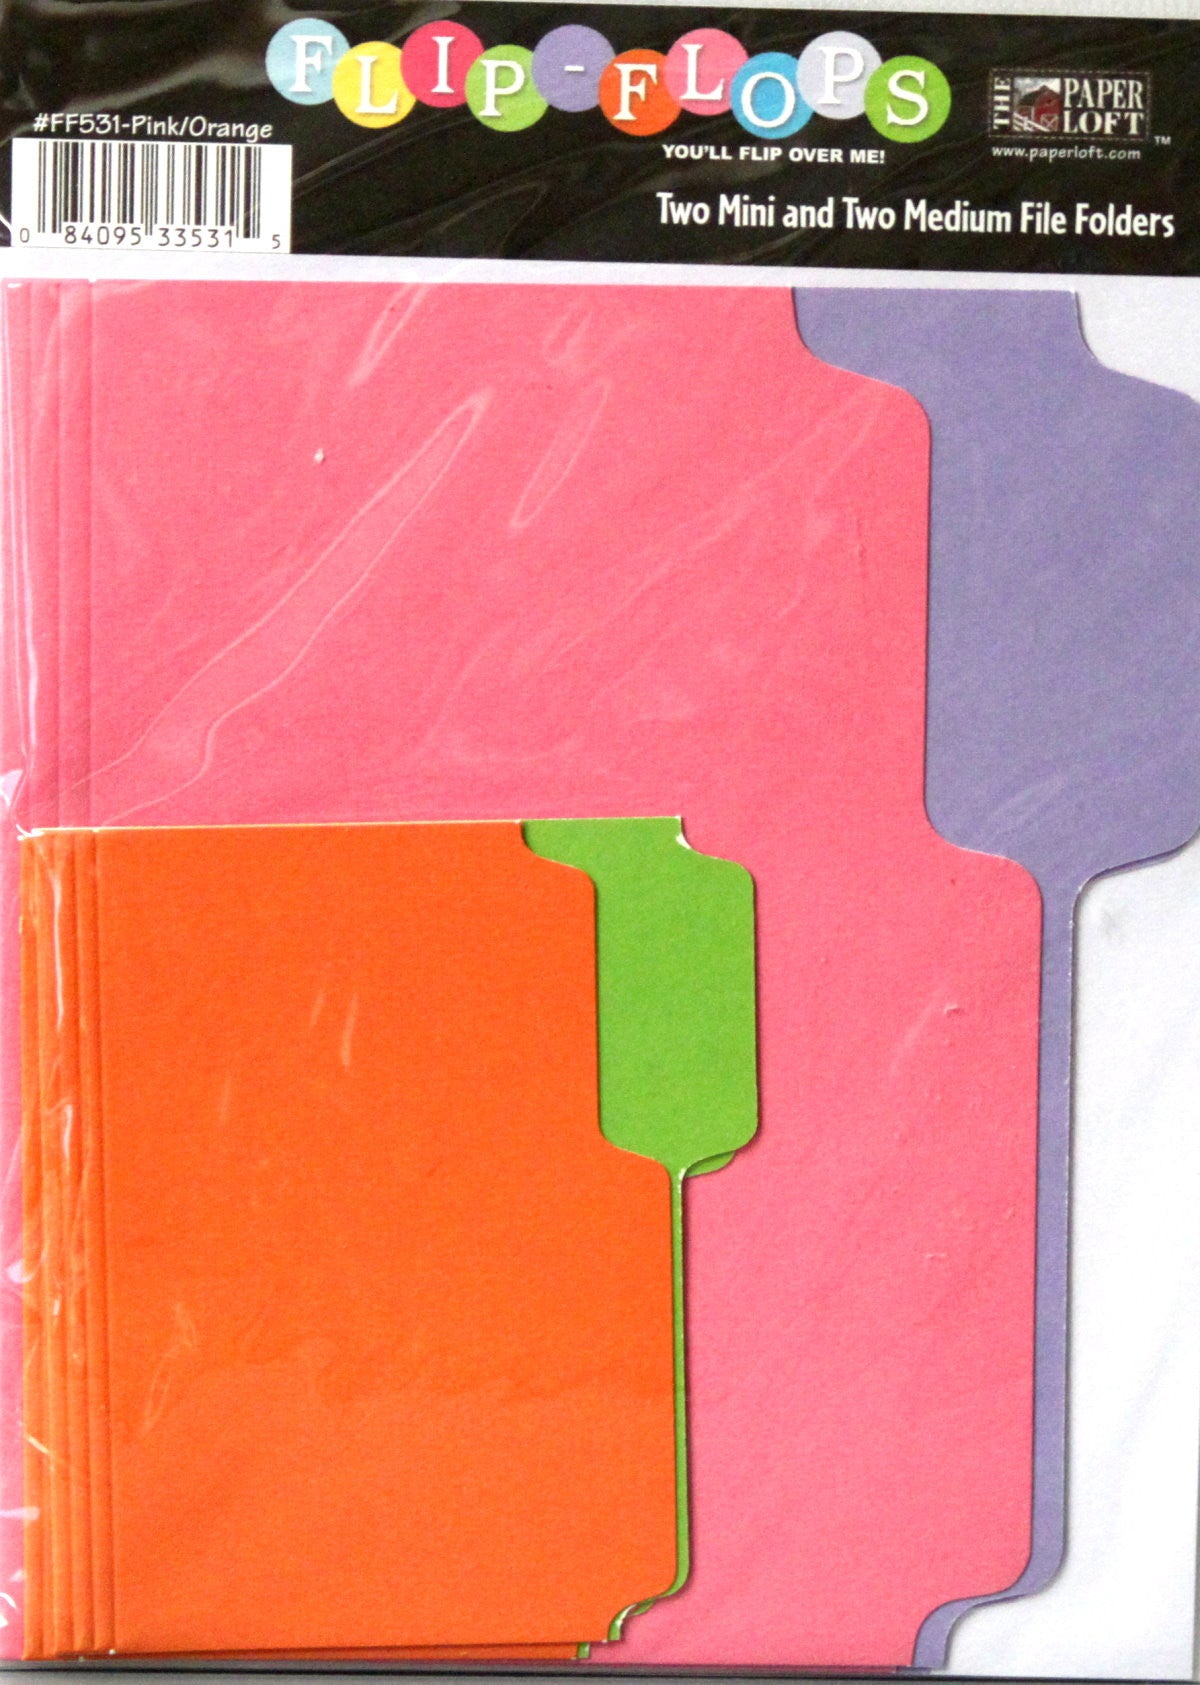 The Paper Loft Flip-Flops Pink/Orange File Folders